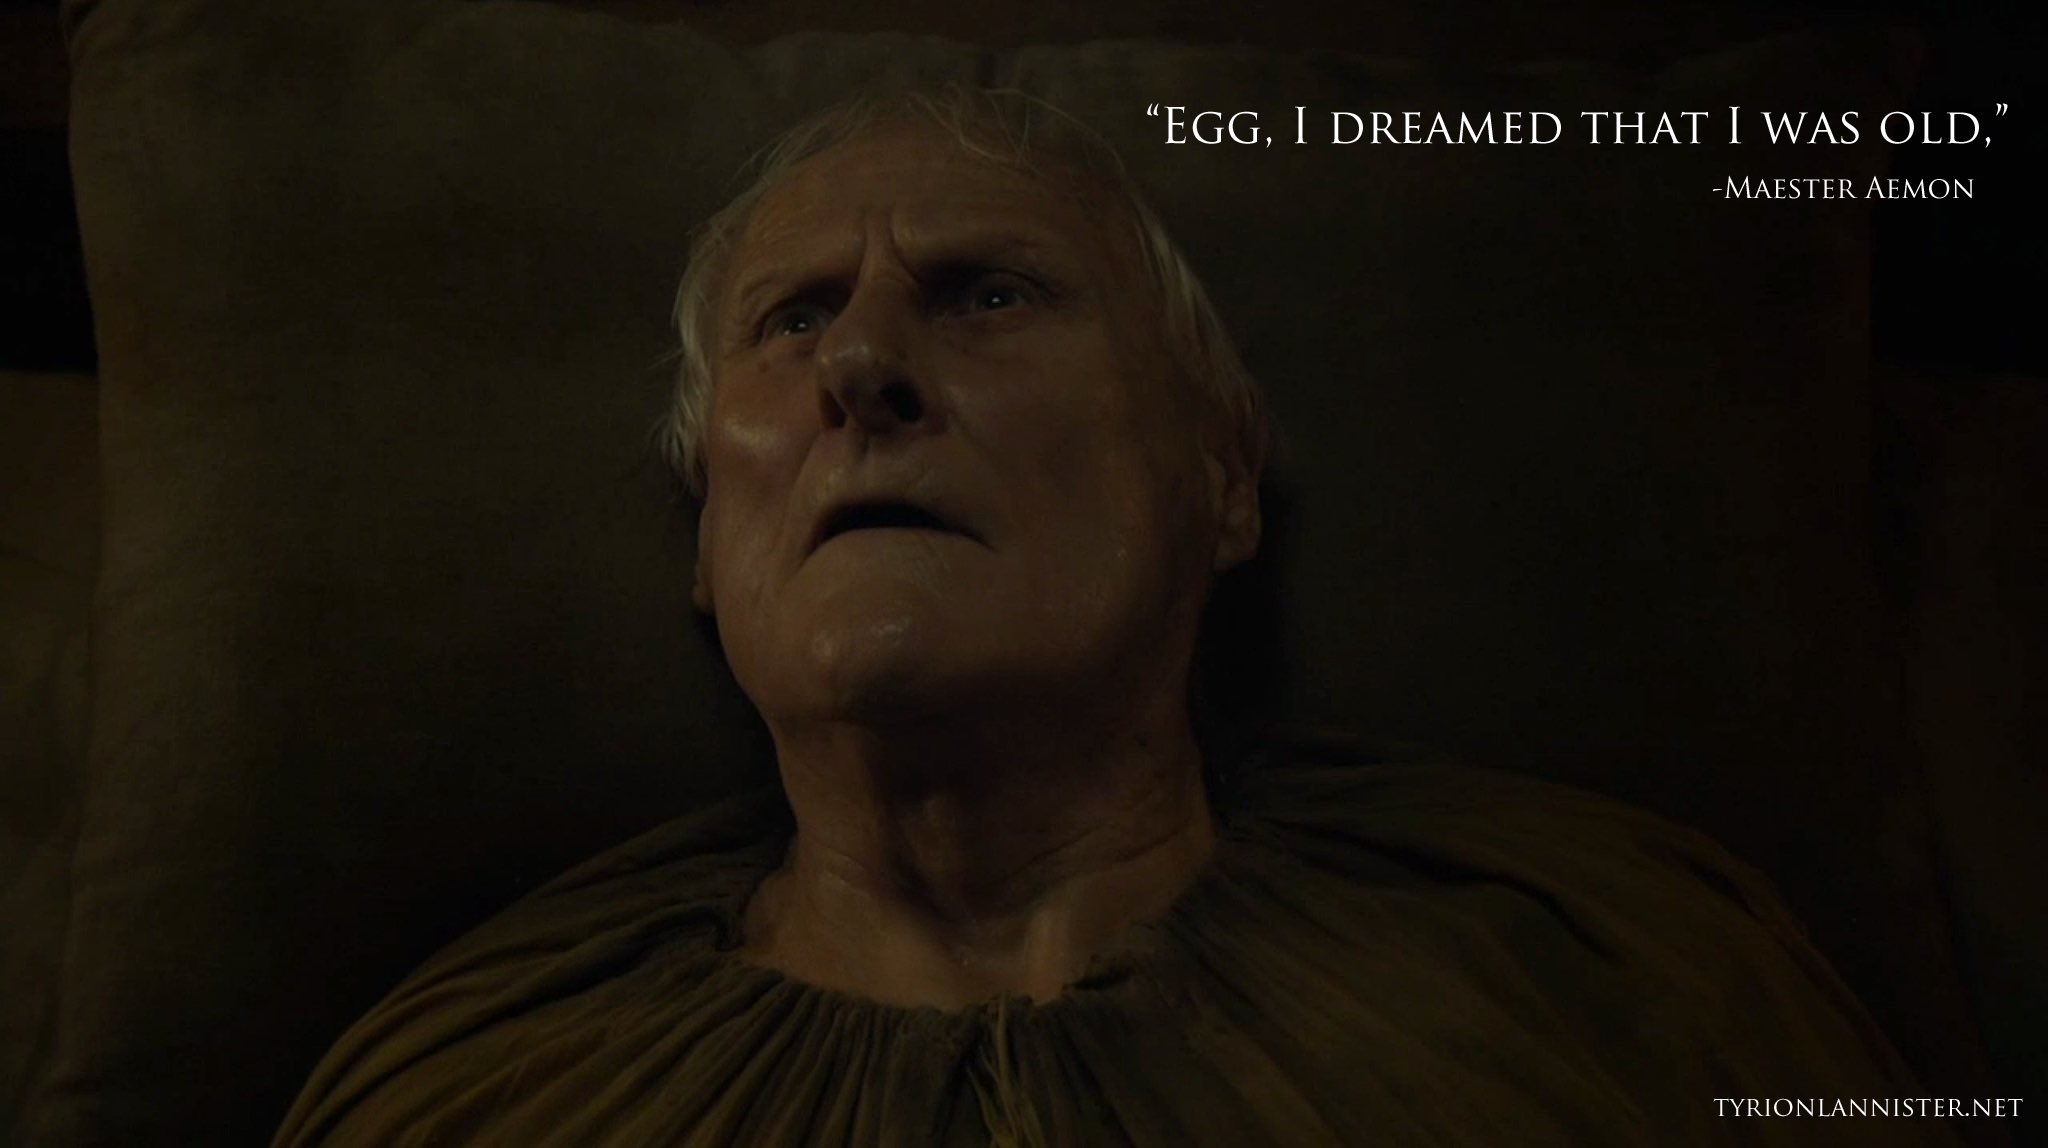 Tyrion Lannister on X: Egg, I dreamed that I was old. — Maester Aemon  #GoT50  / X